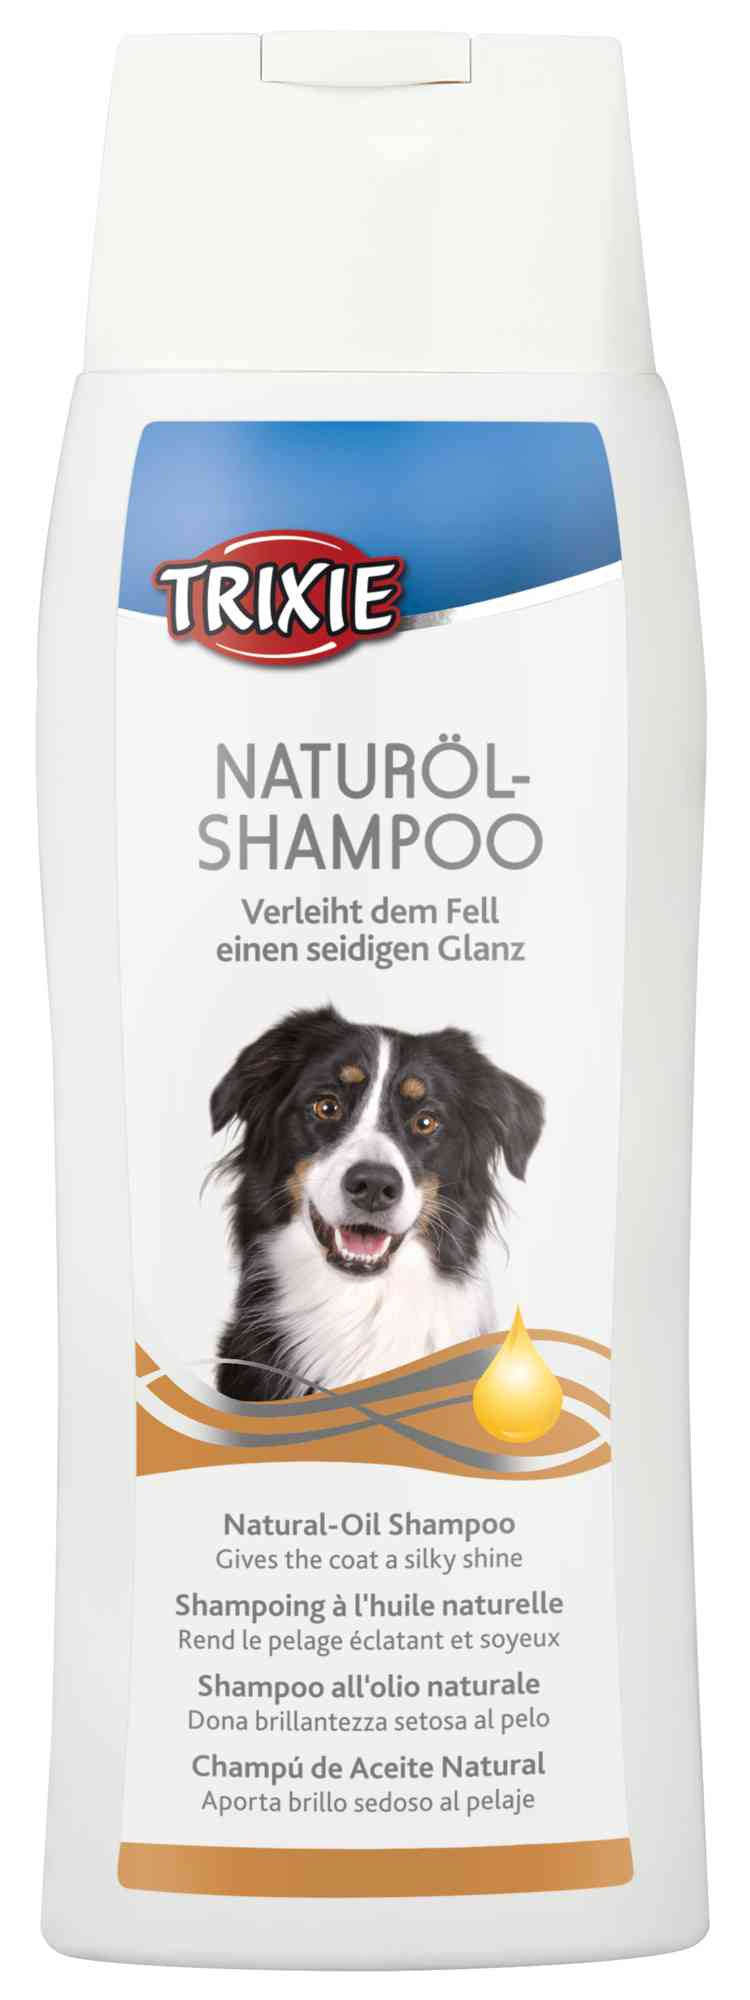 Natural-Oil Shampoo